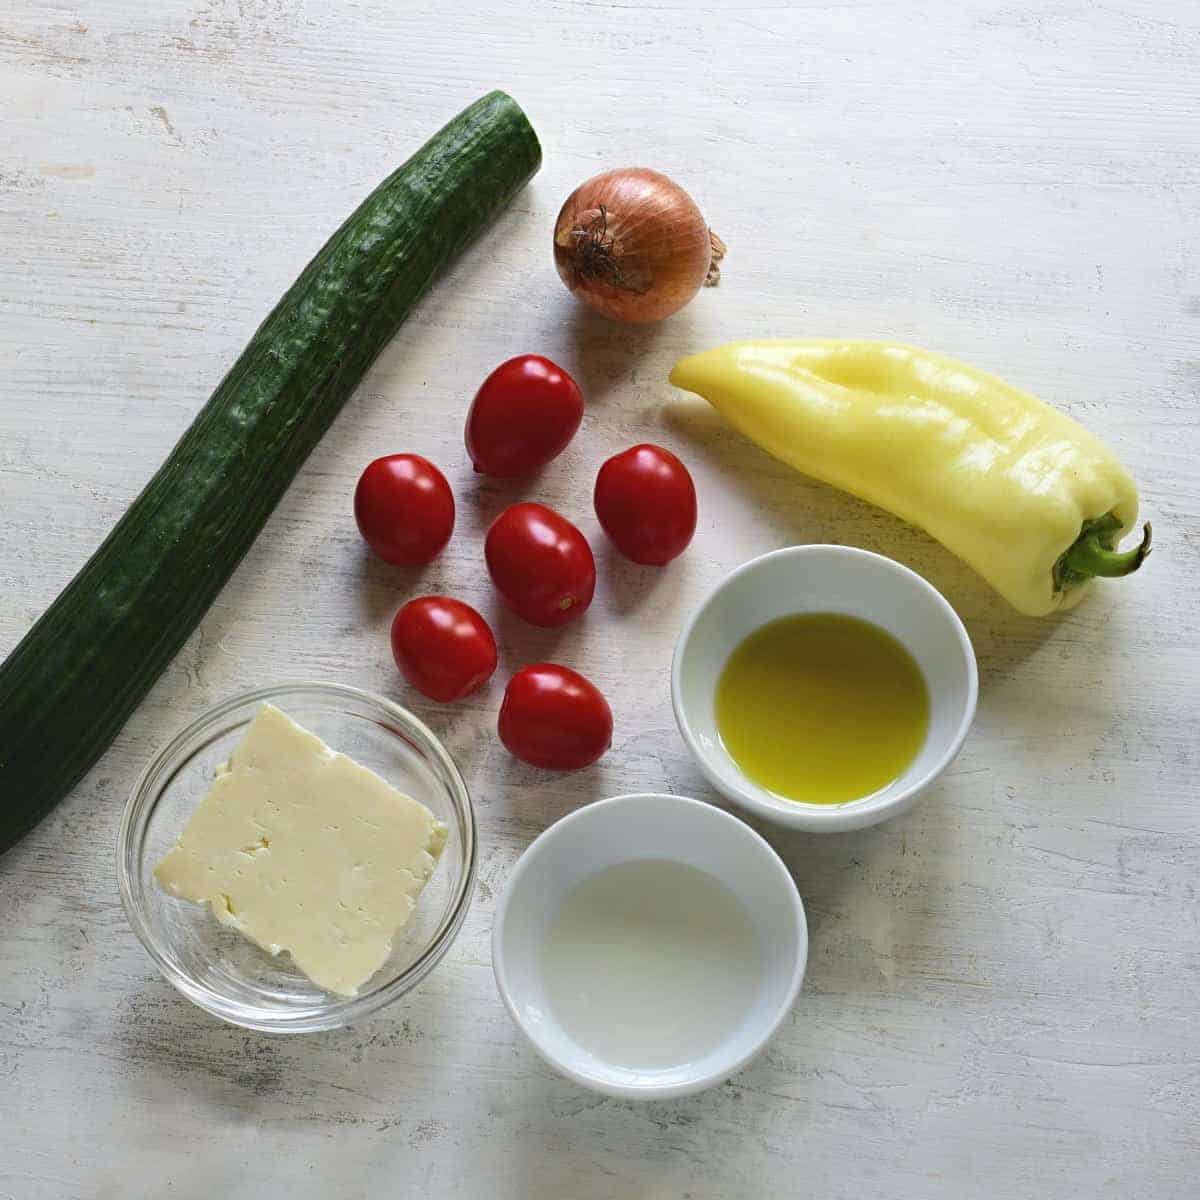 shopska salad ingredients